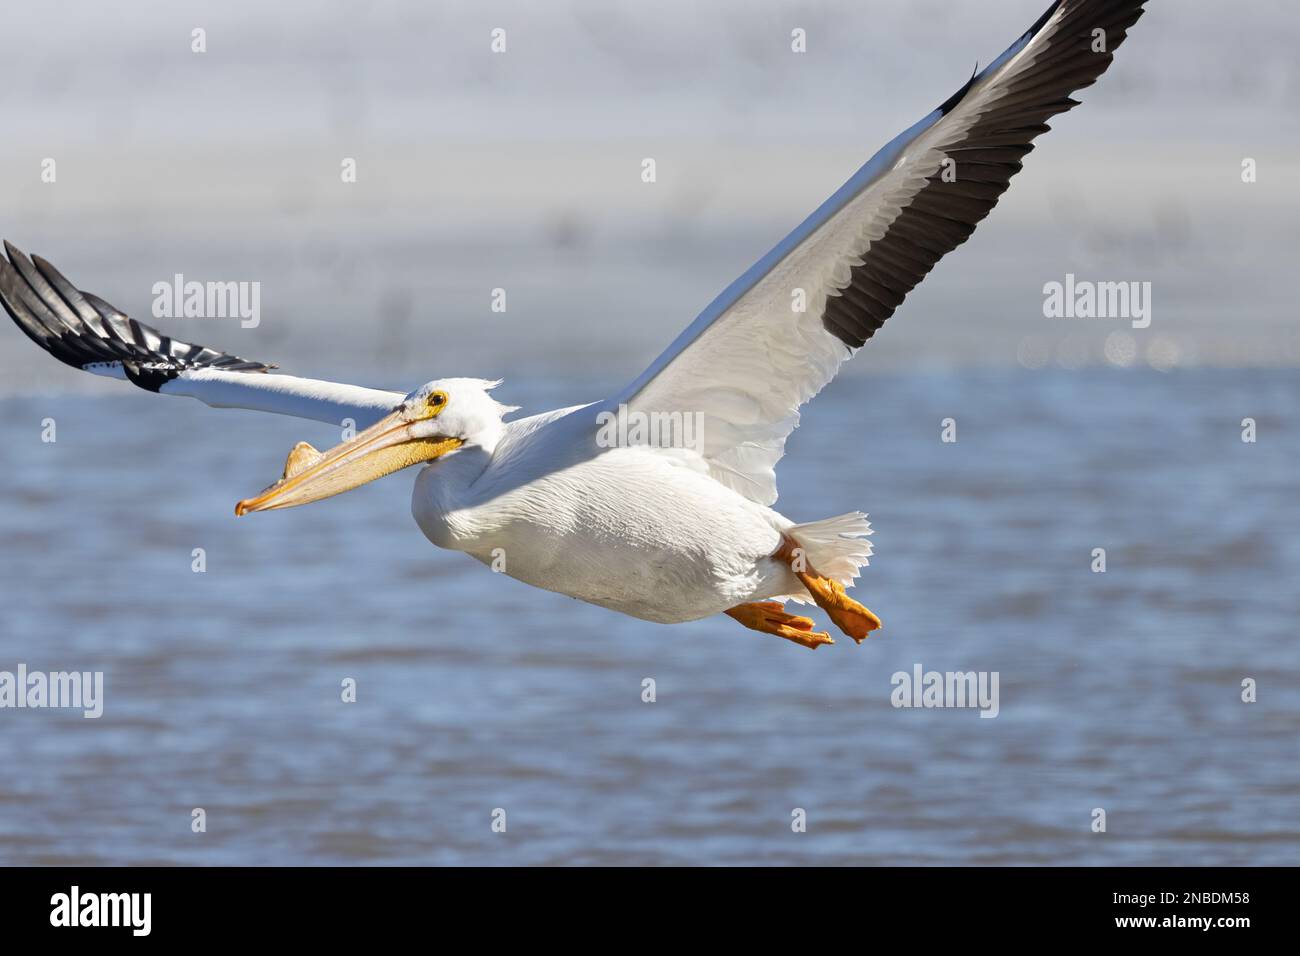 American White Pelican Flying Against Blue Sky Stock Image - Image of  pelecanidae, jocotopec: 112400593